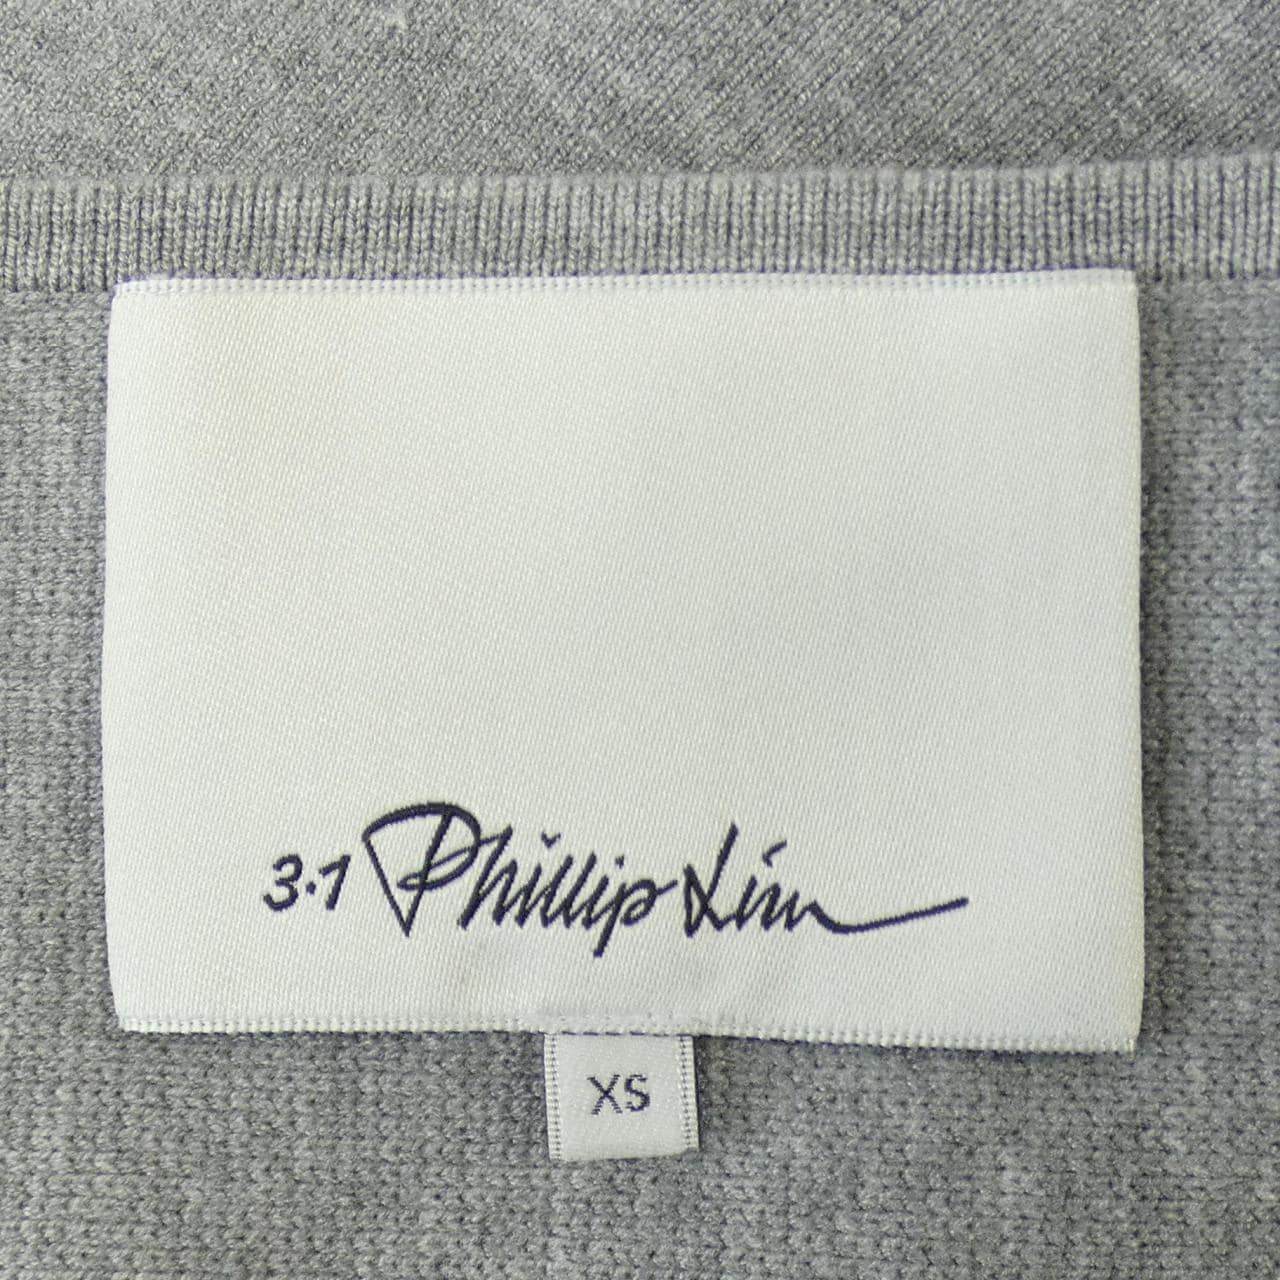 3.1 Phillip Lim 3.1 林菲力浦裙